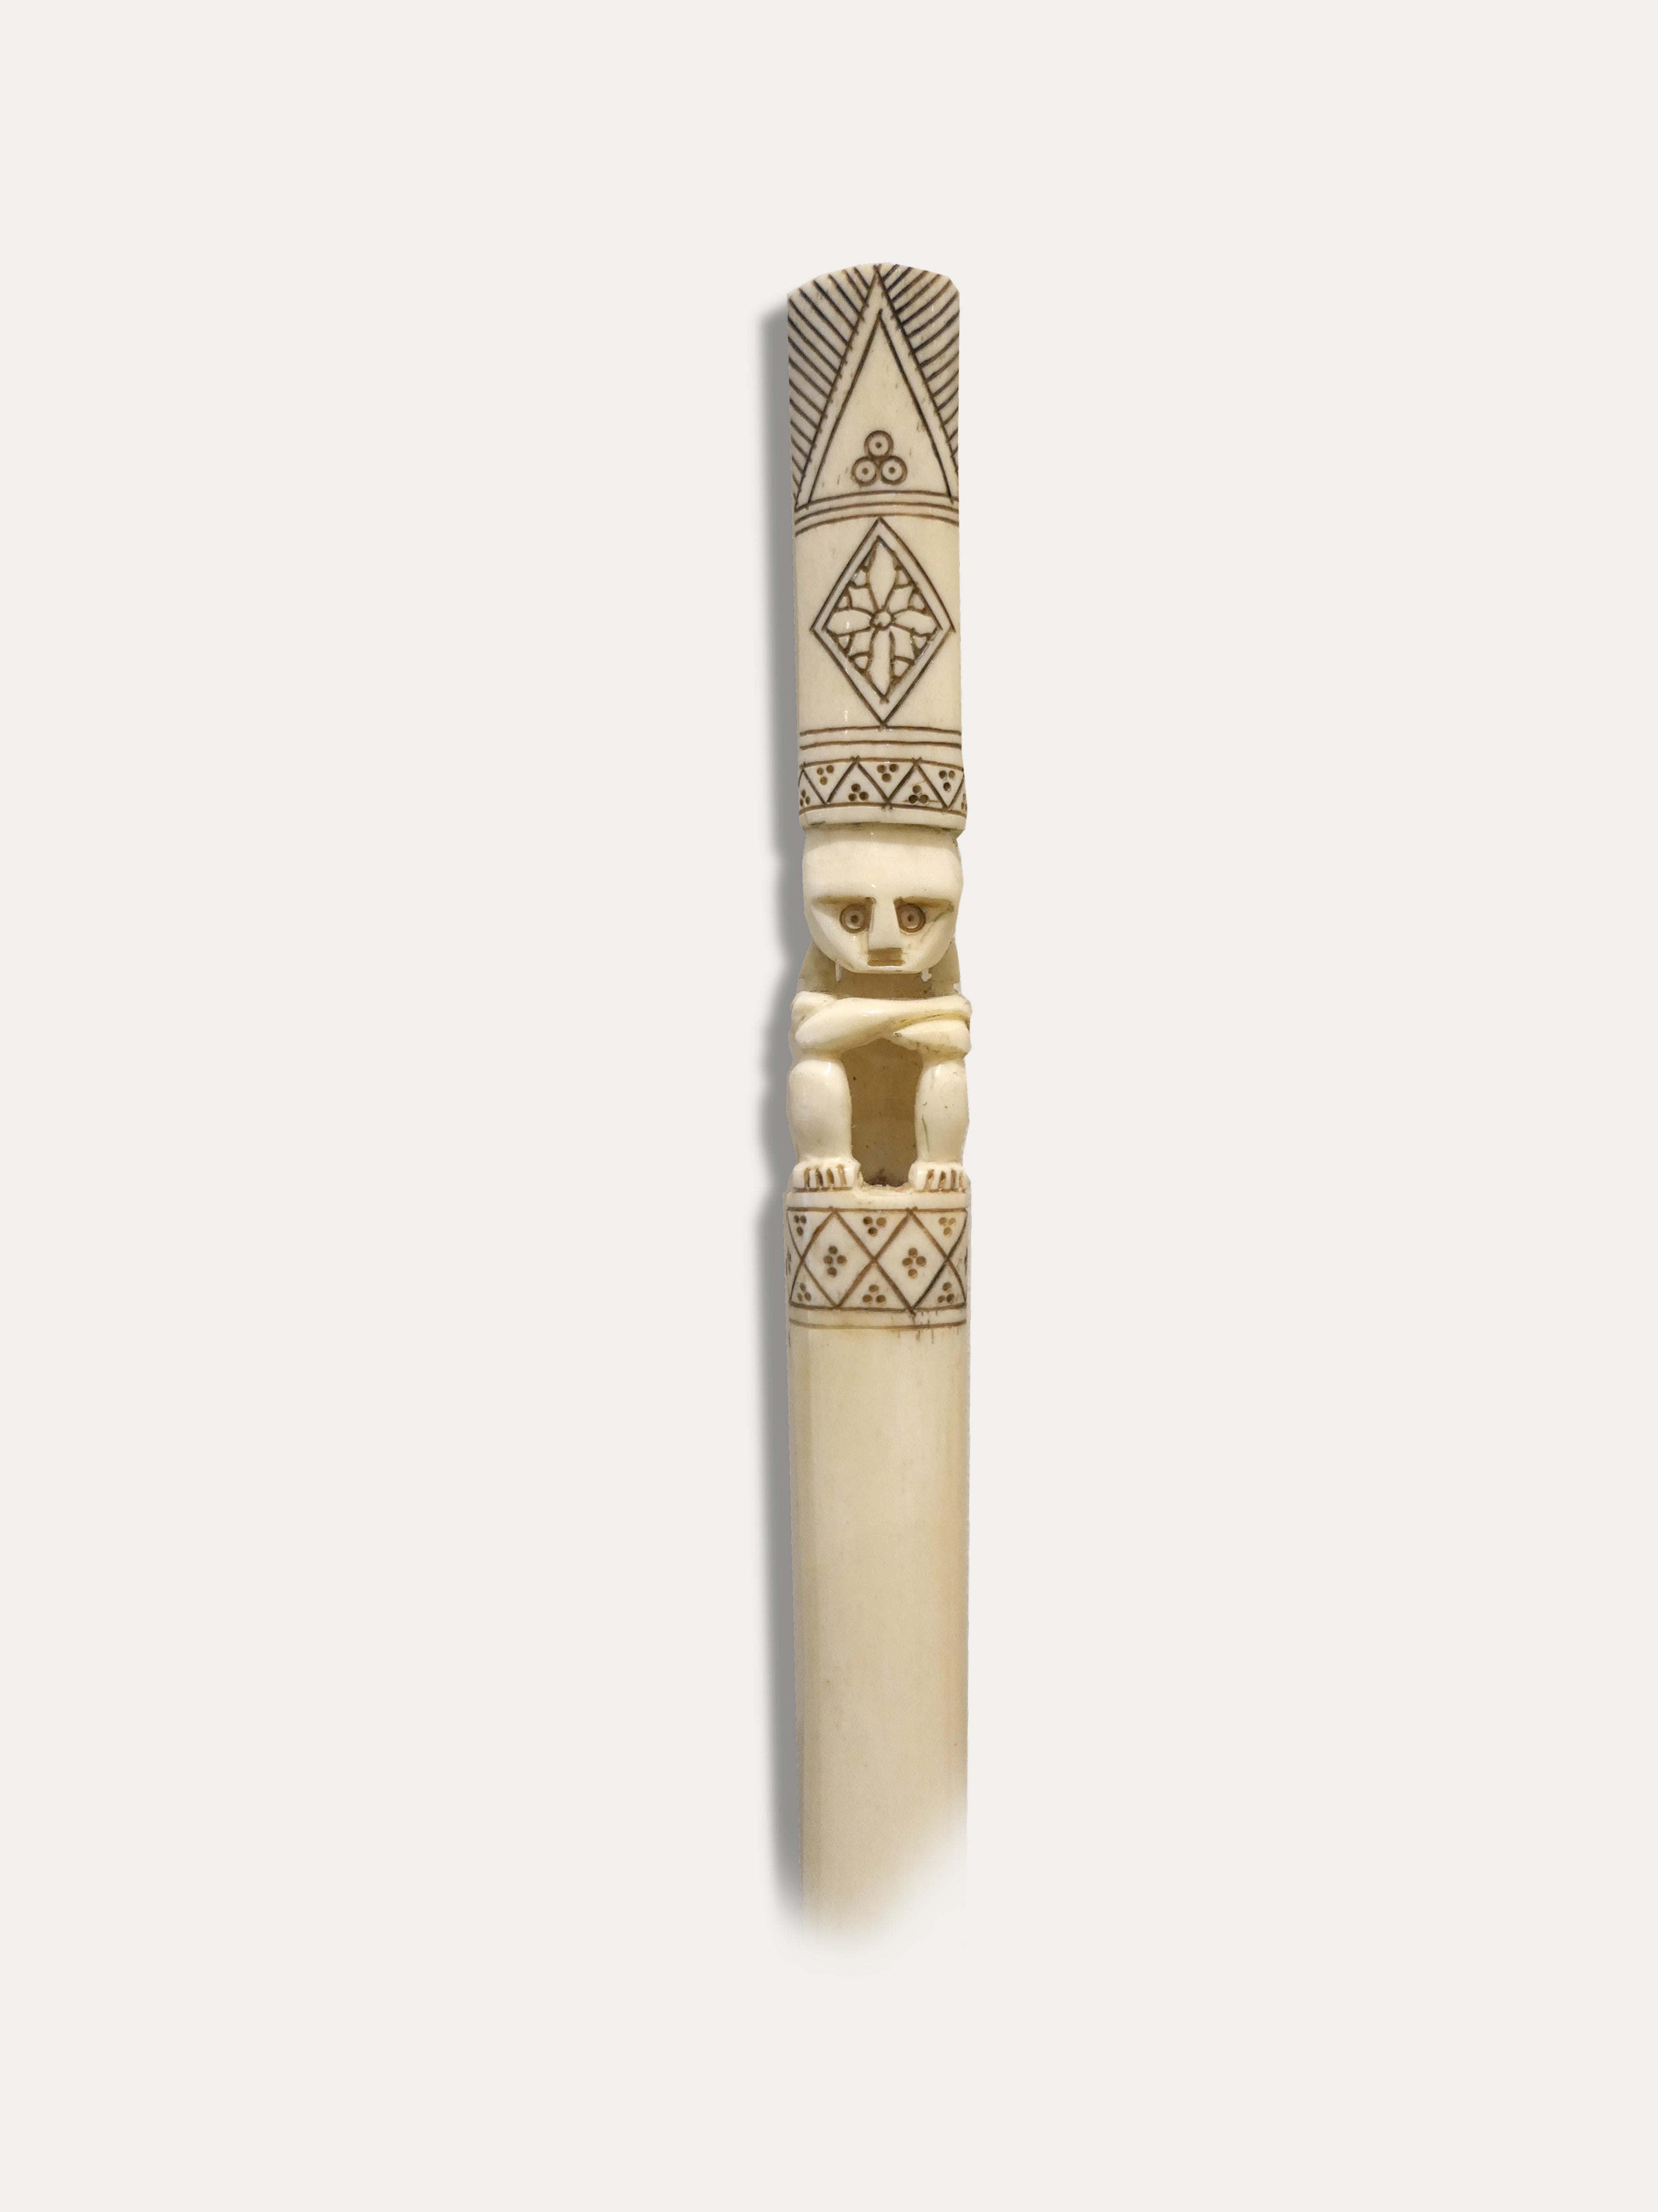 Set of 3 Tun Tun - Tribal Wood and Buffalo Bone Totems from Sumba - Asian Art from Kirschon